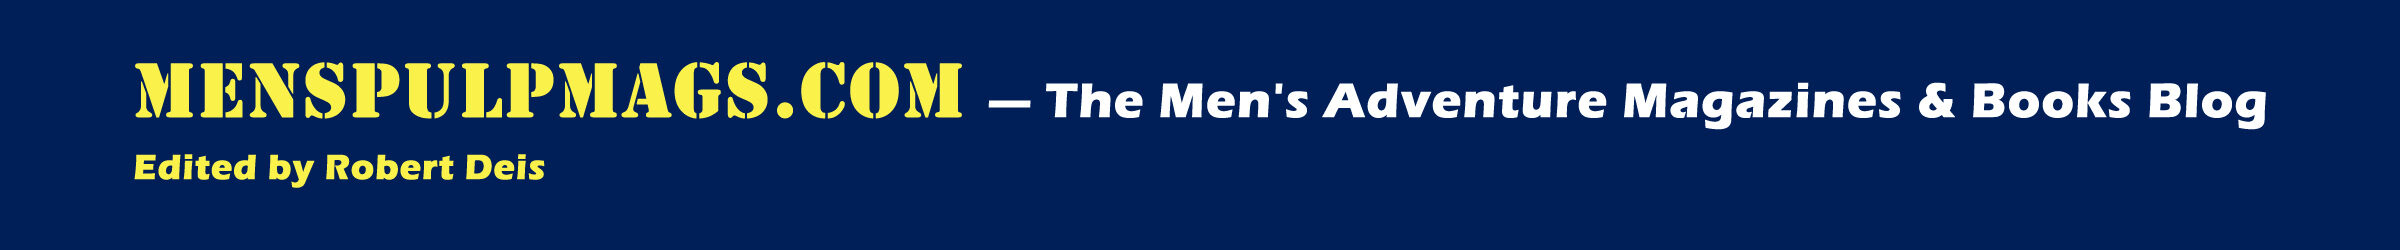 The Men's Adventure Magazines Blog